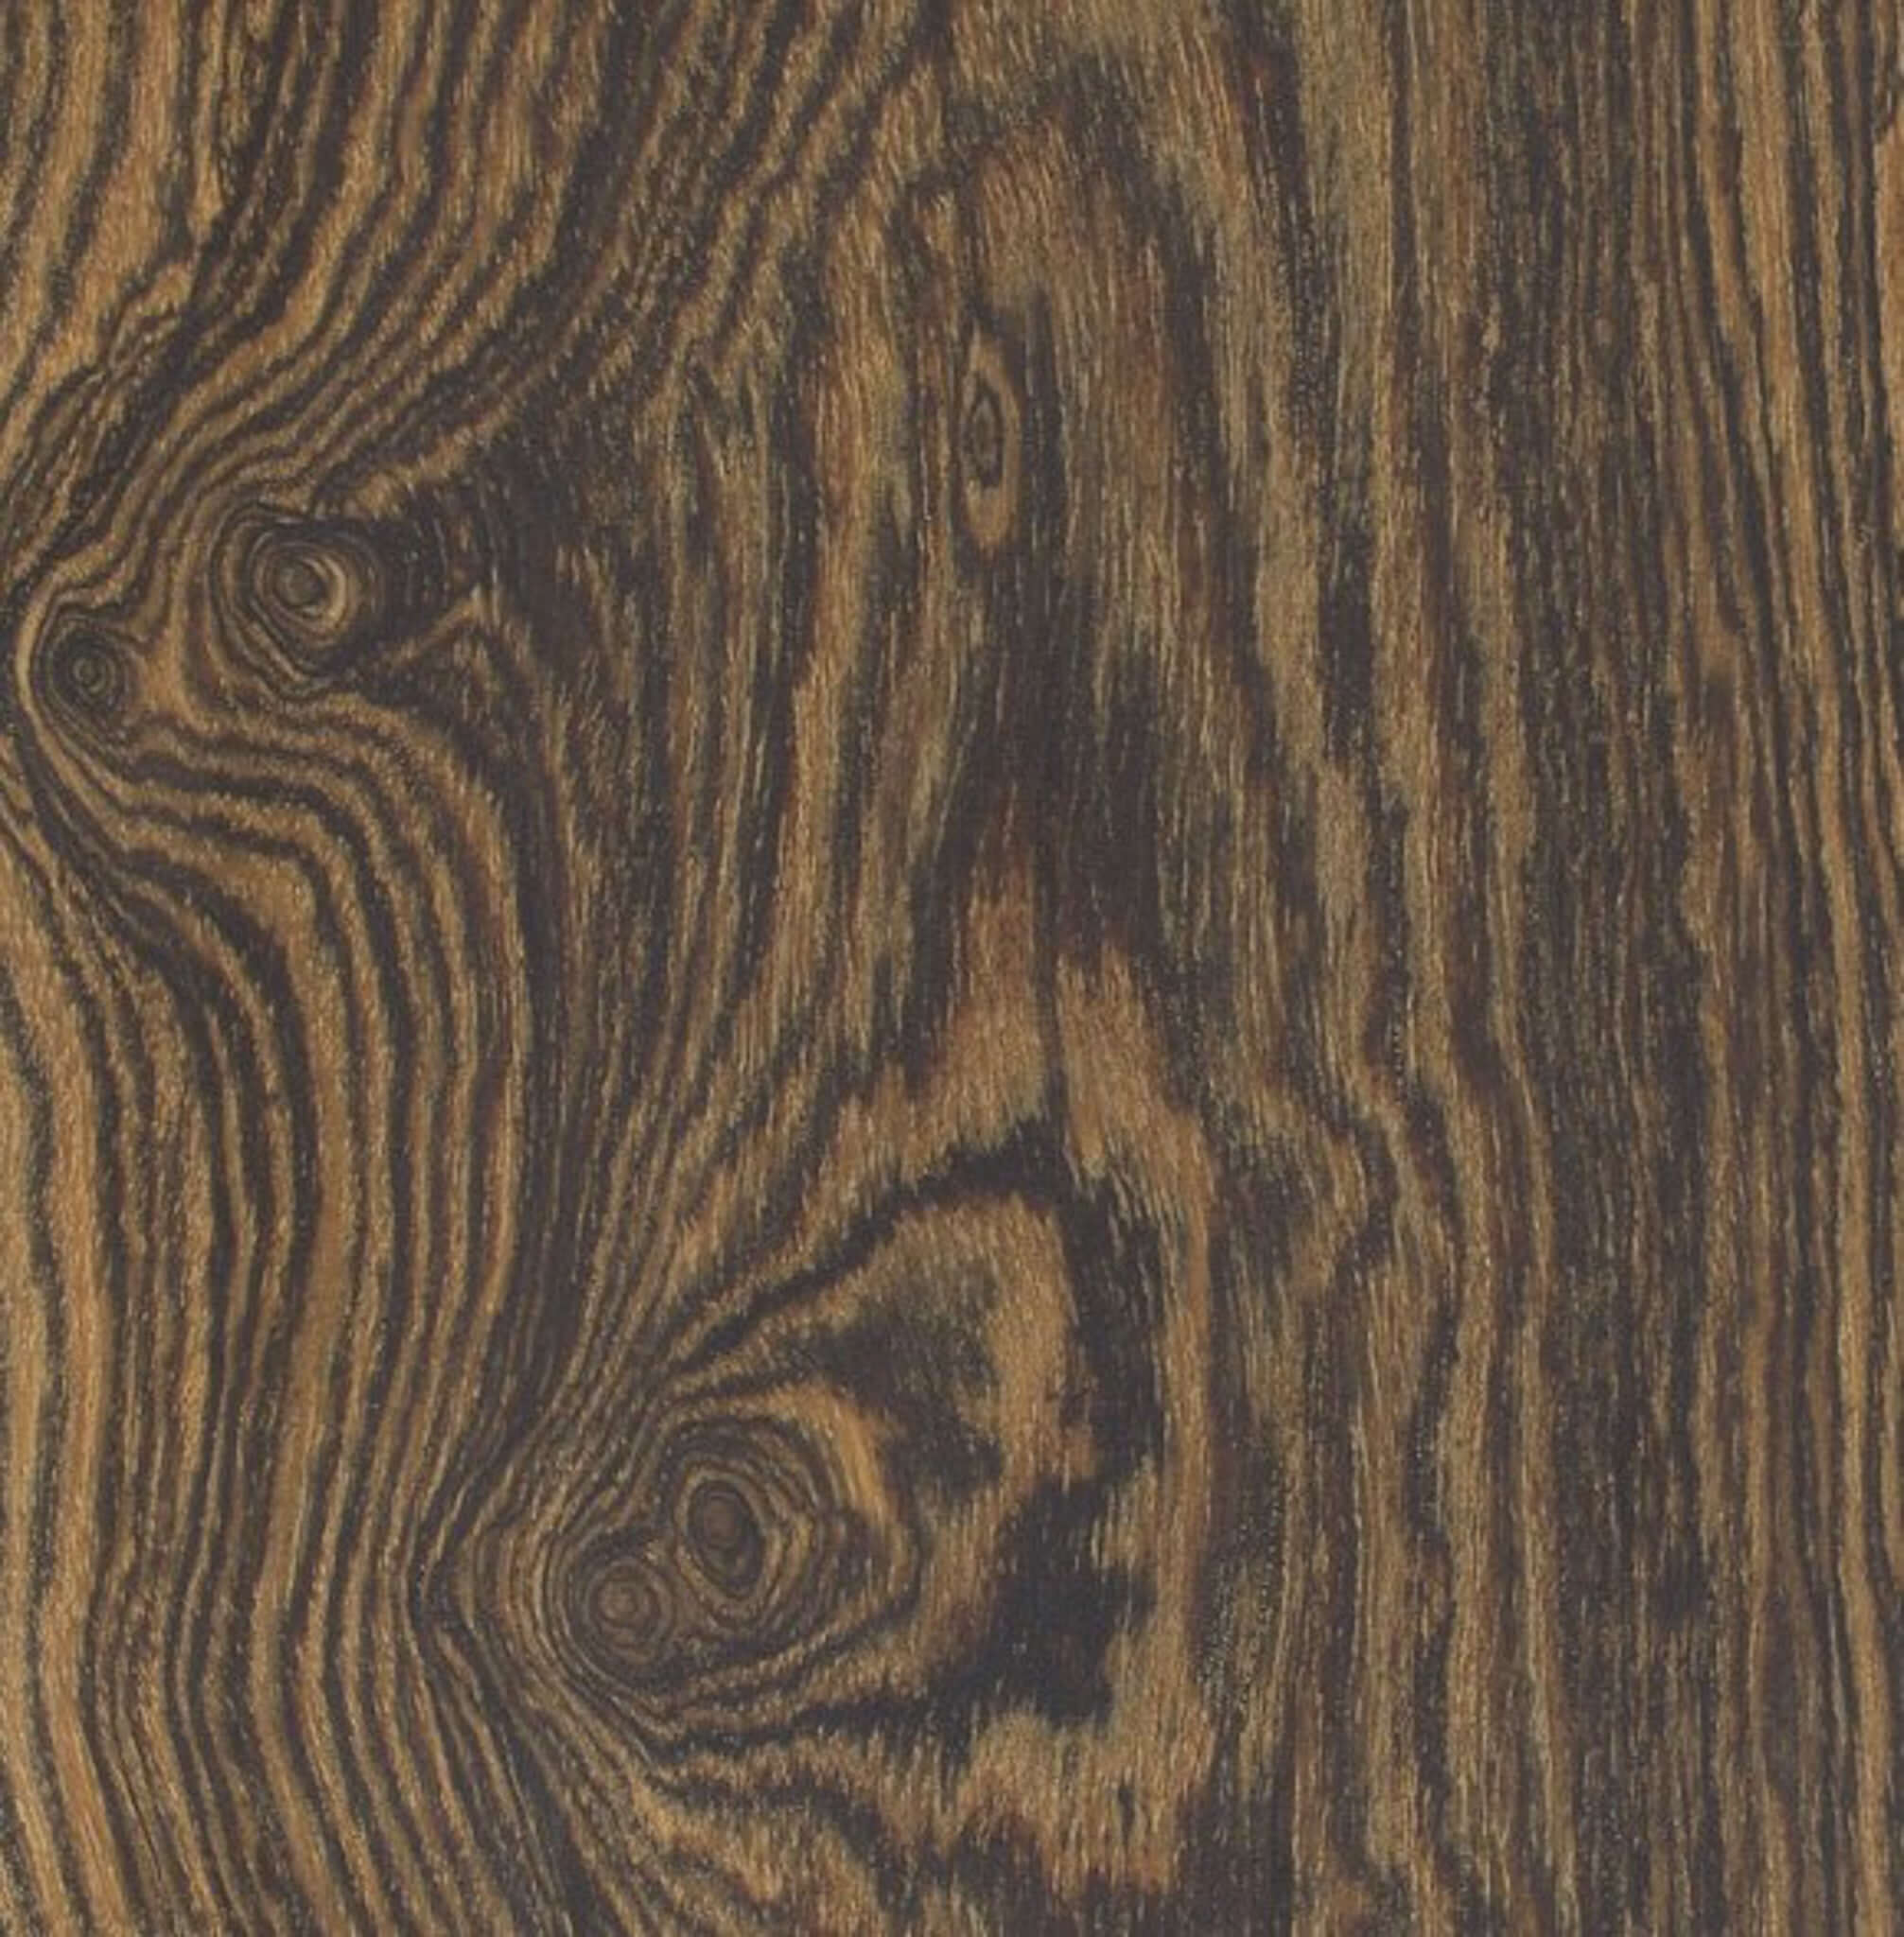 a sample of bocote wood